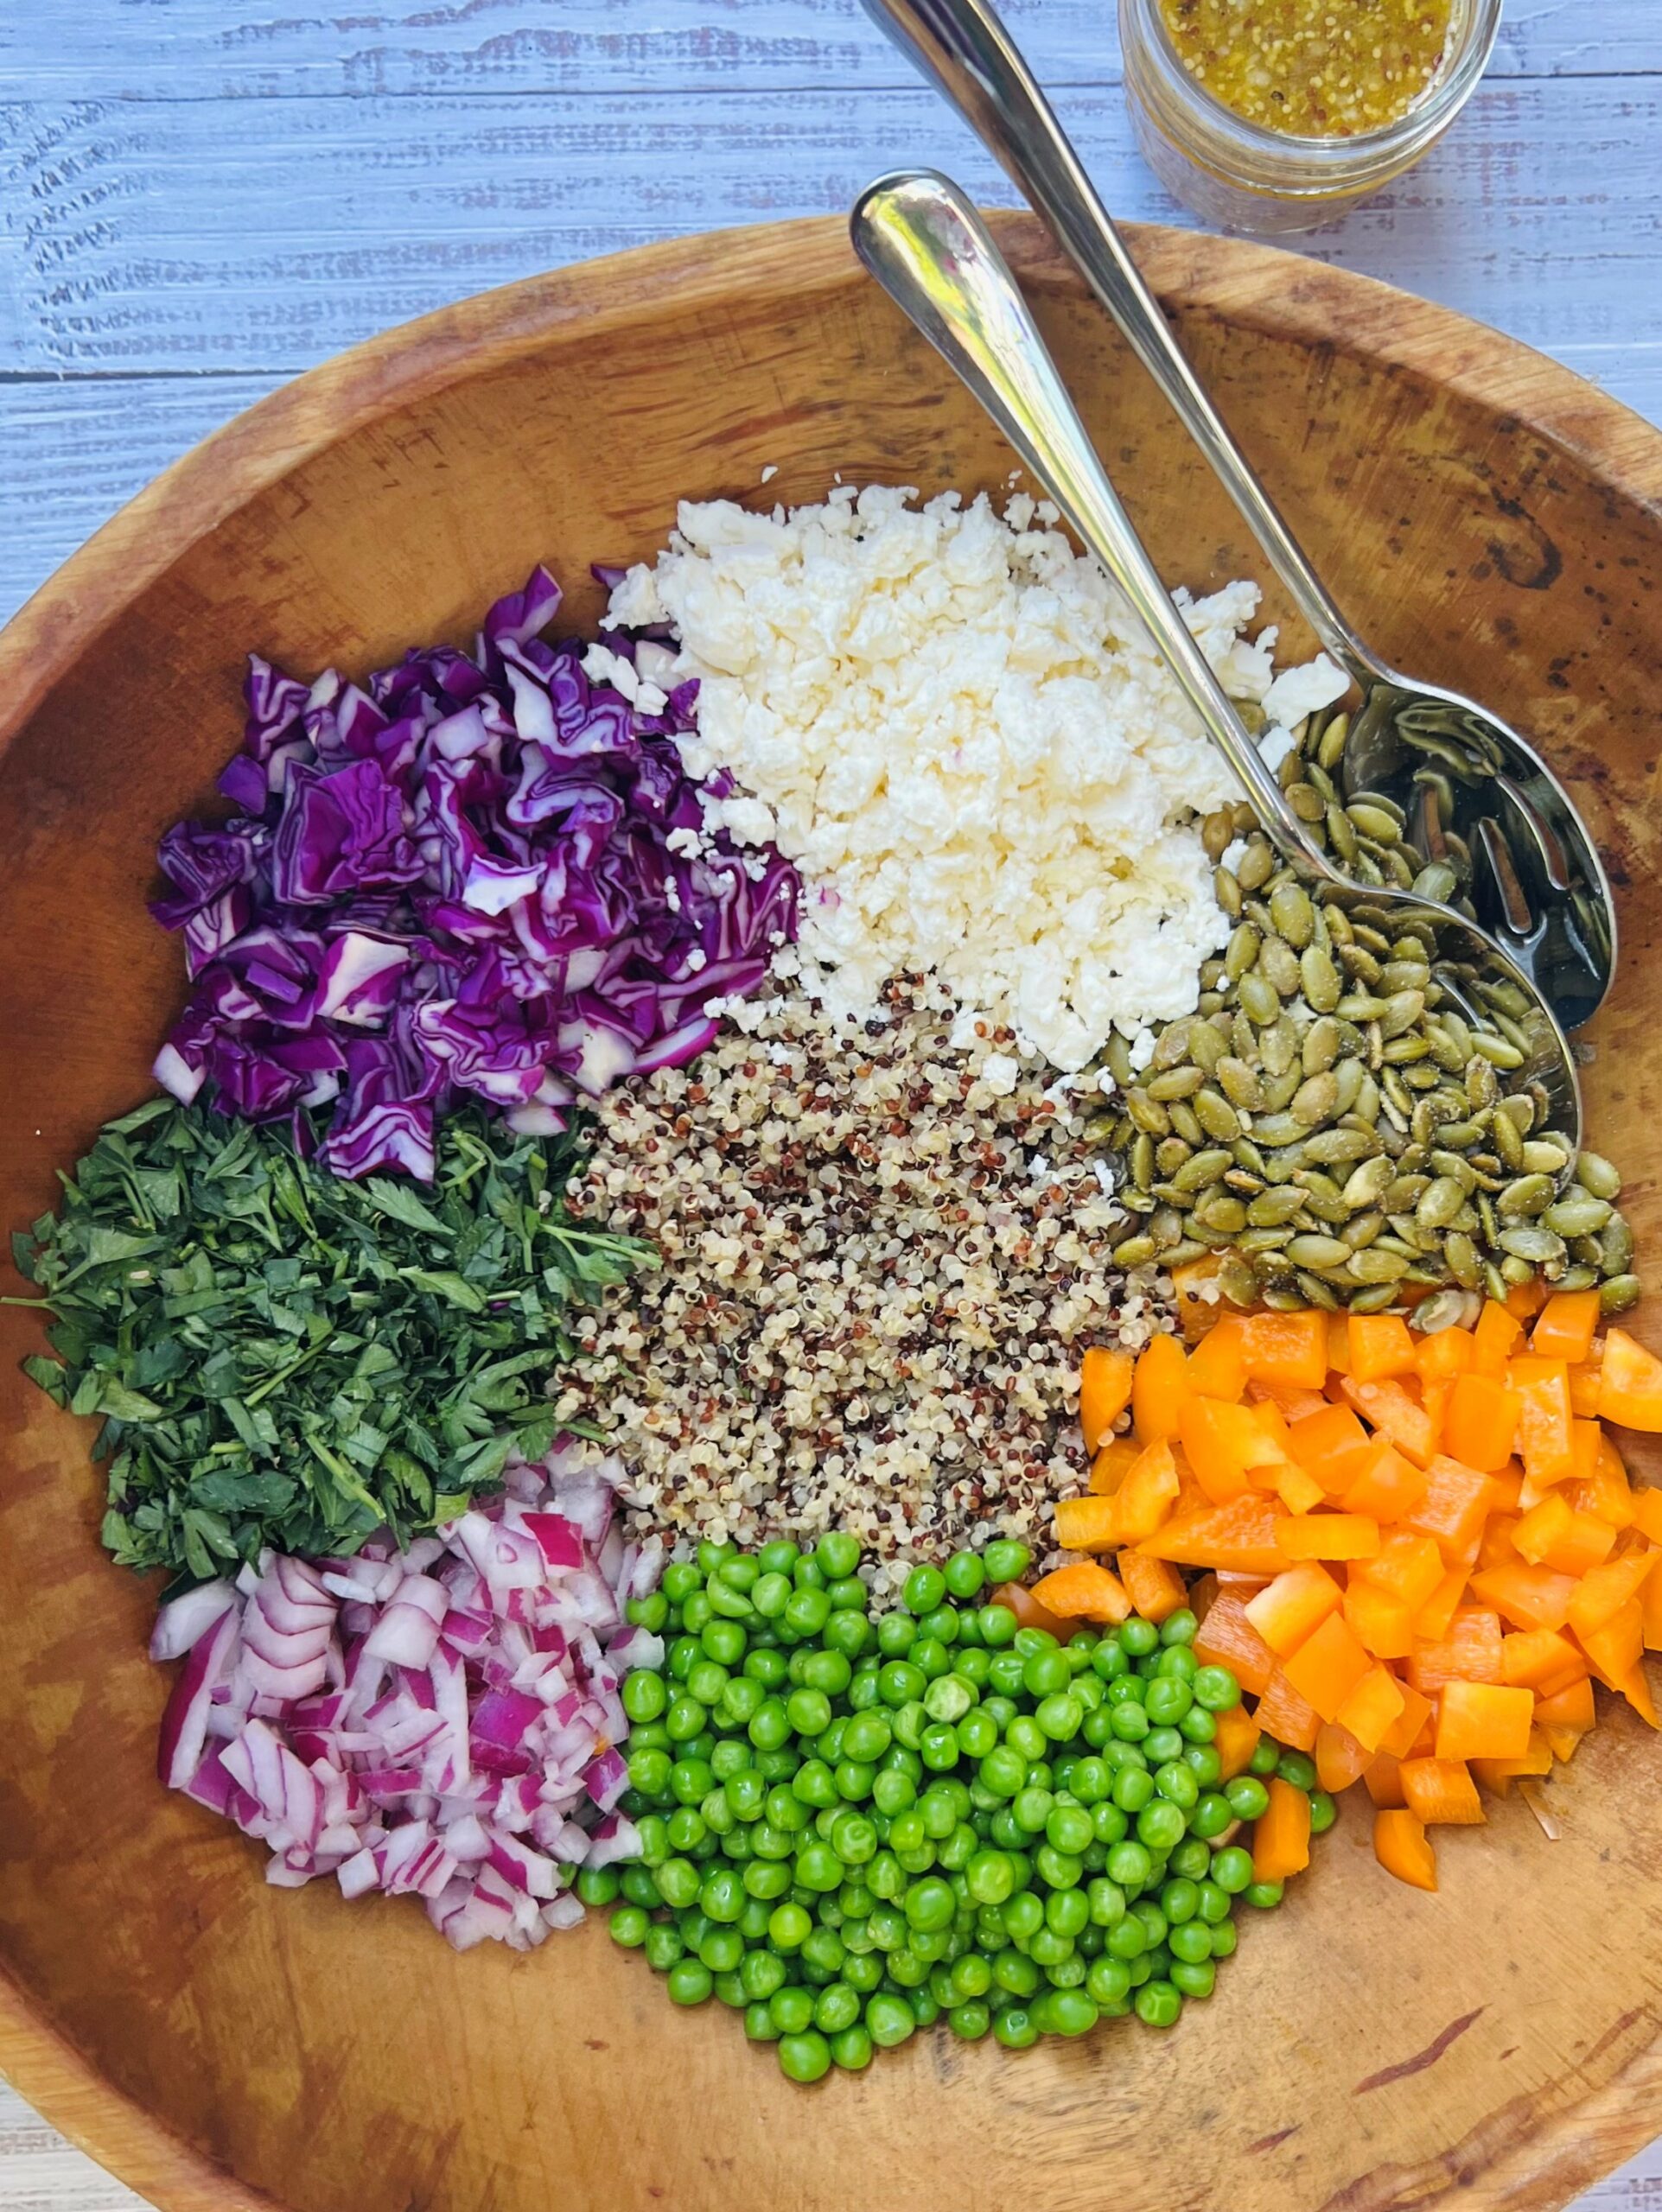 Rainbow Quinoa Salad